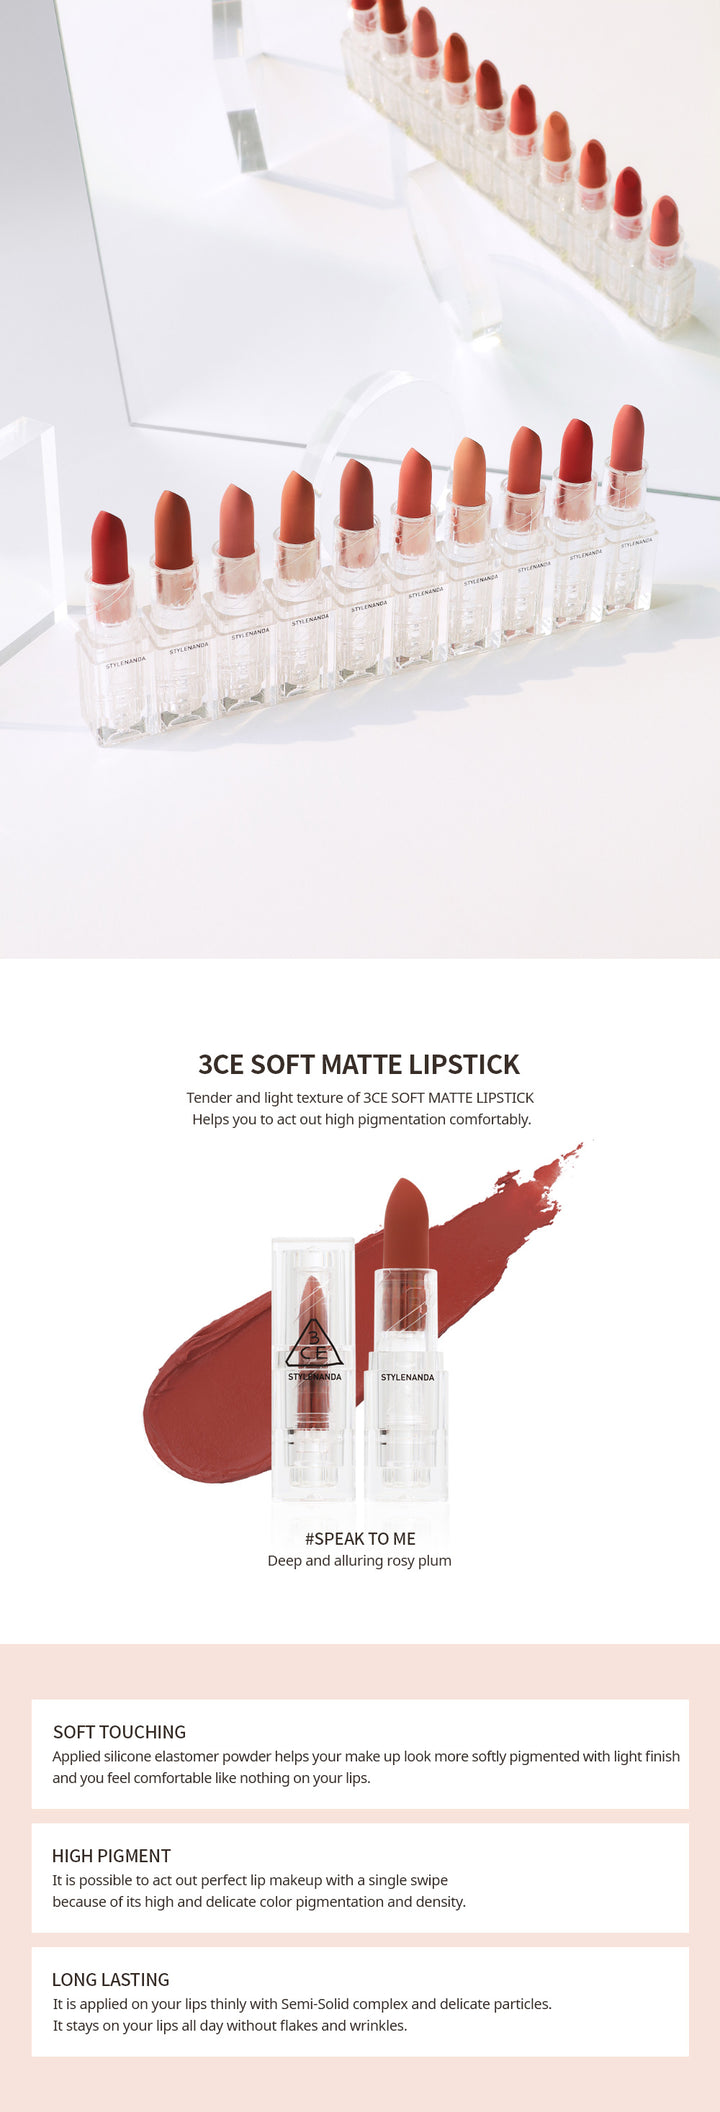 3CE Soft Matte Lipstick #Speak To Me